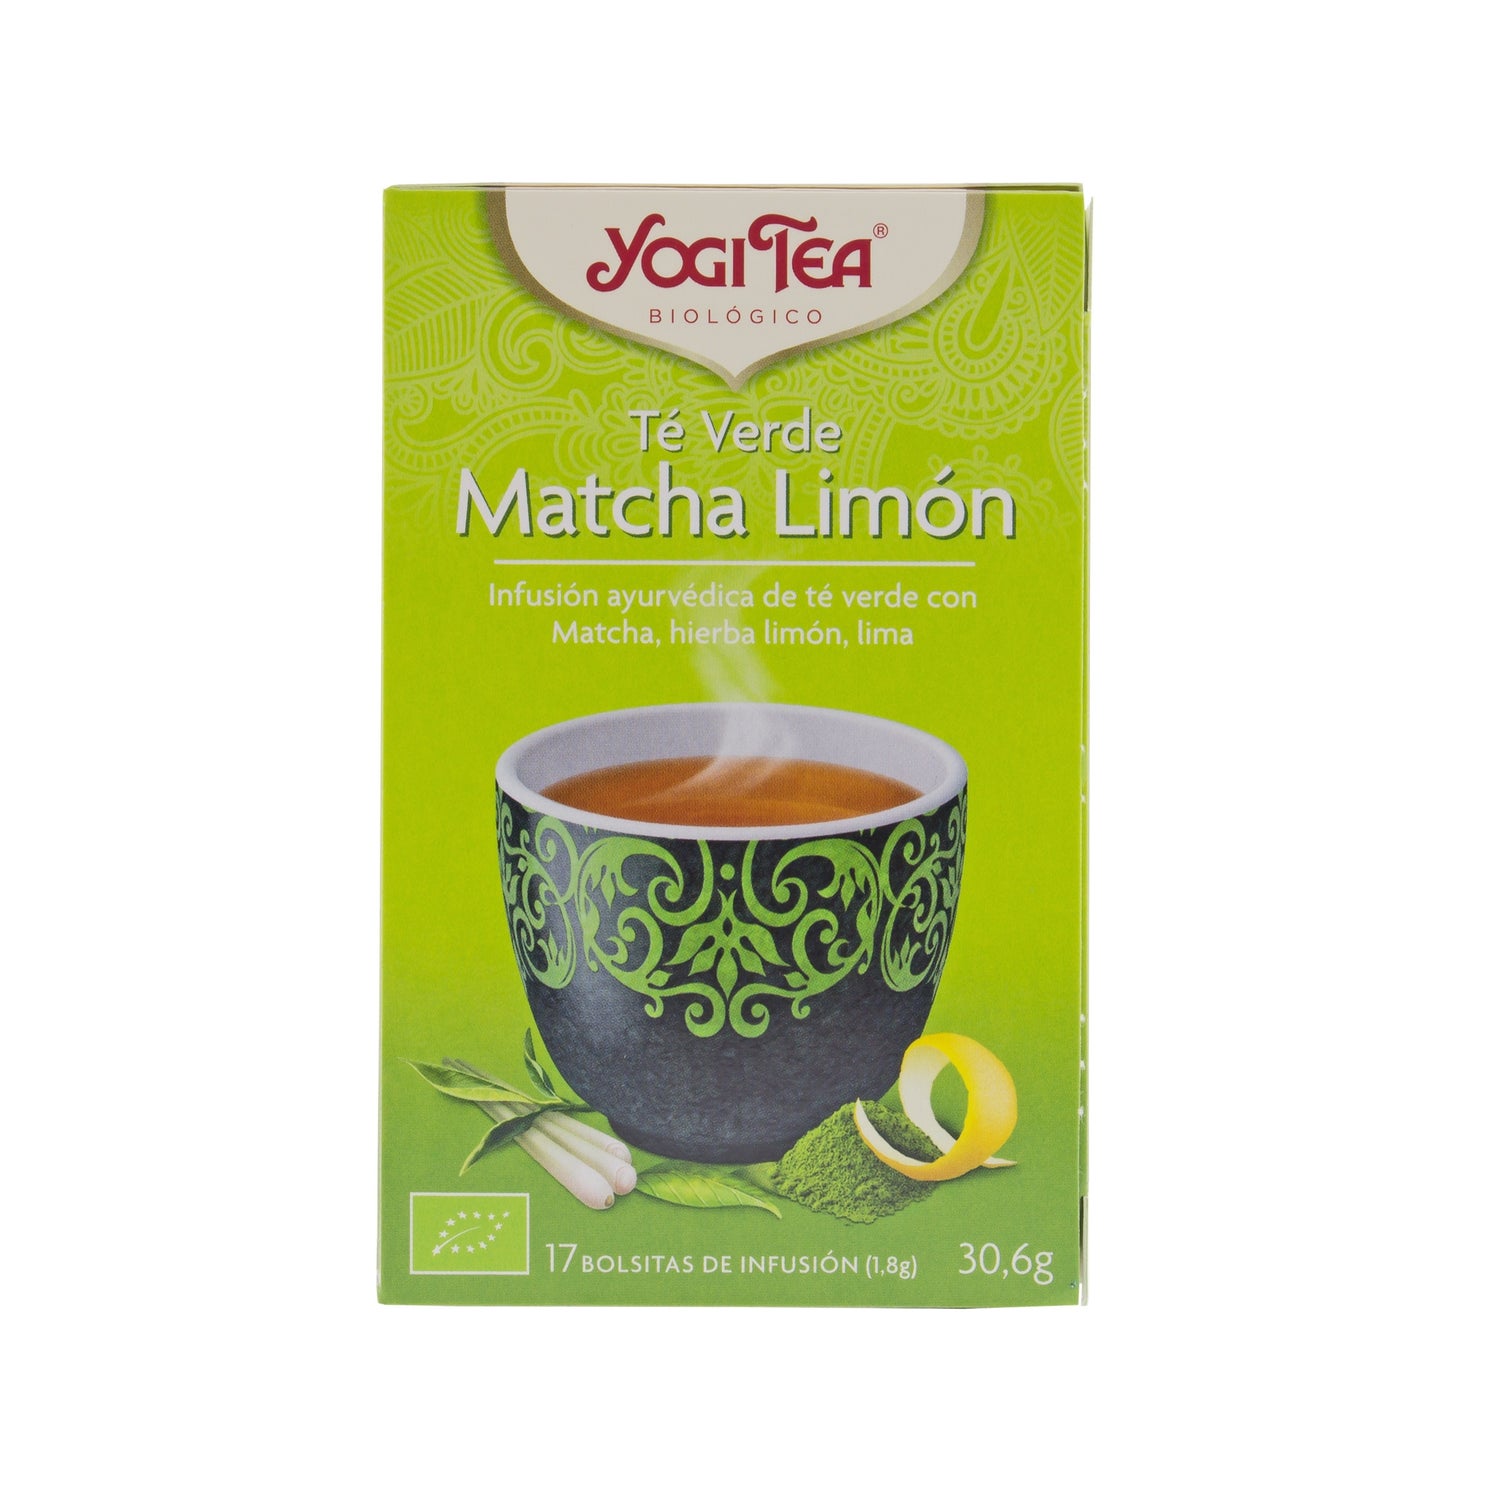 Yogi Tea Green Tea Matcha Lemon – a soli 3,49 € su